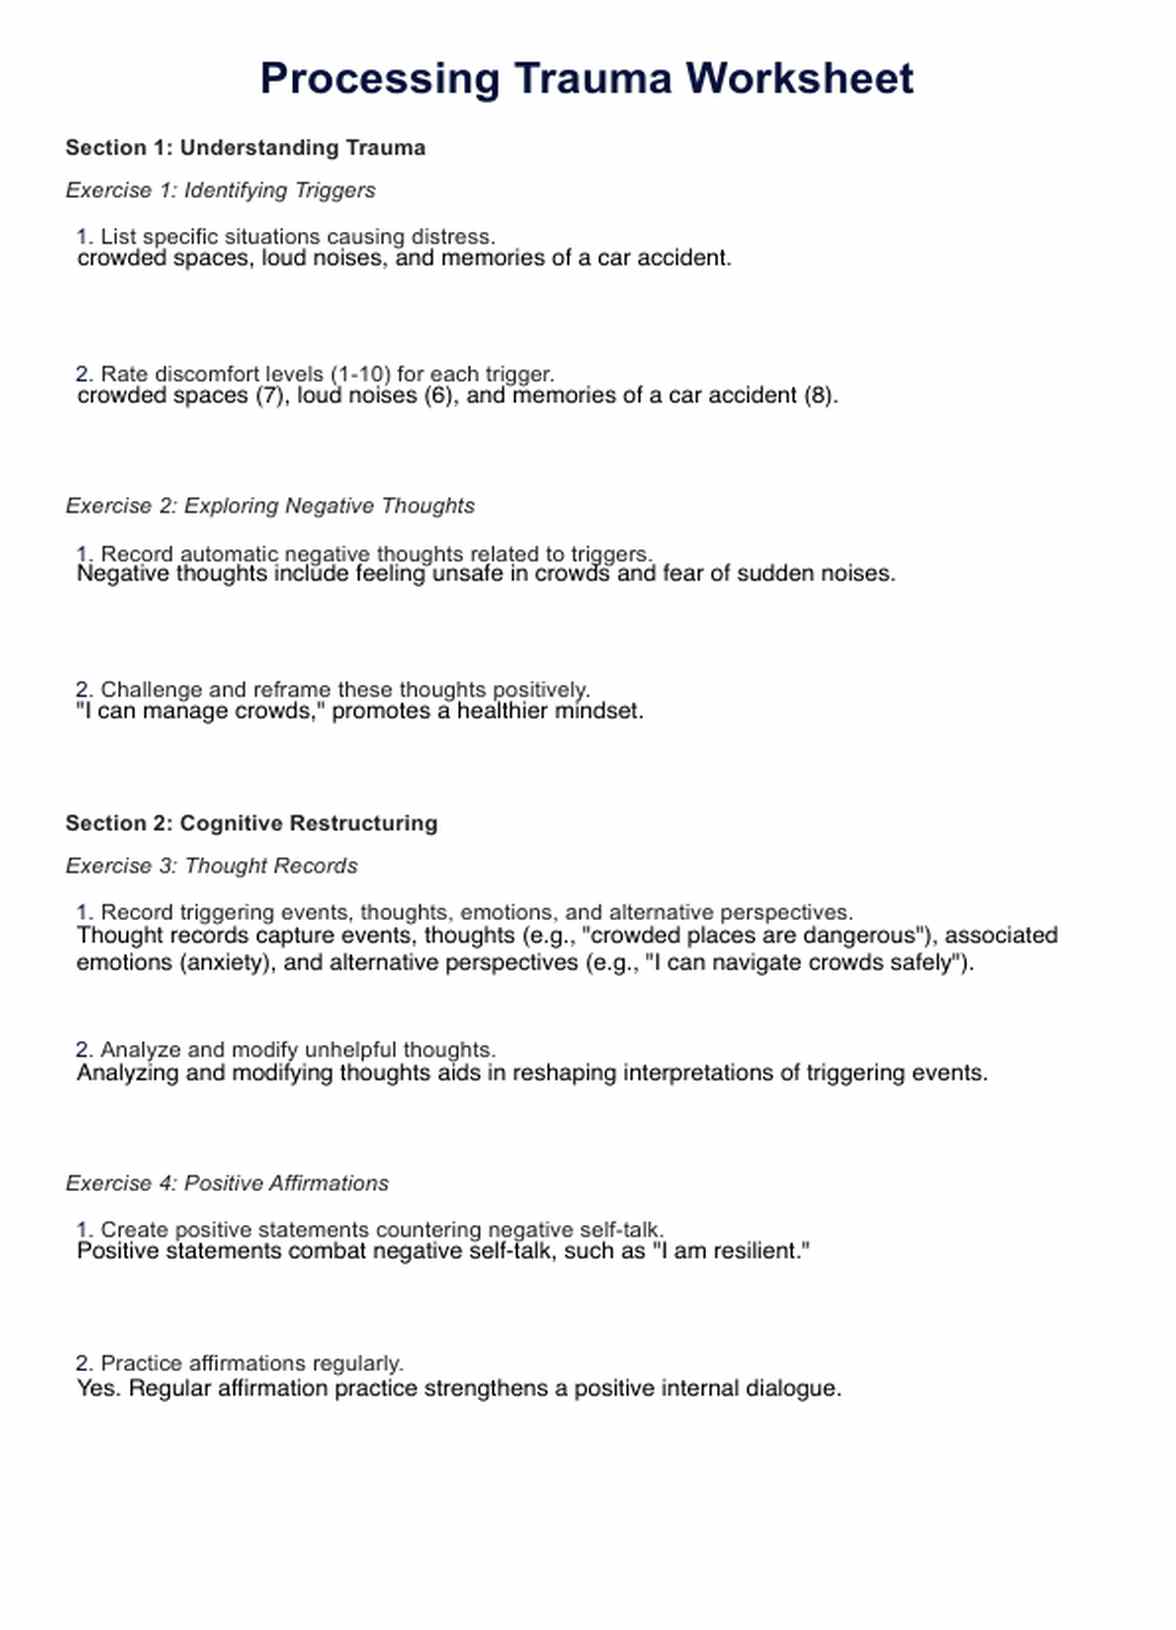 Processing Trauma Worksheet PDF Example